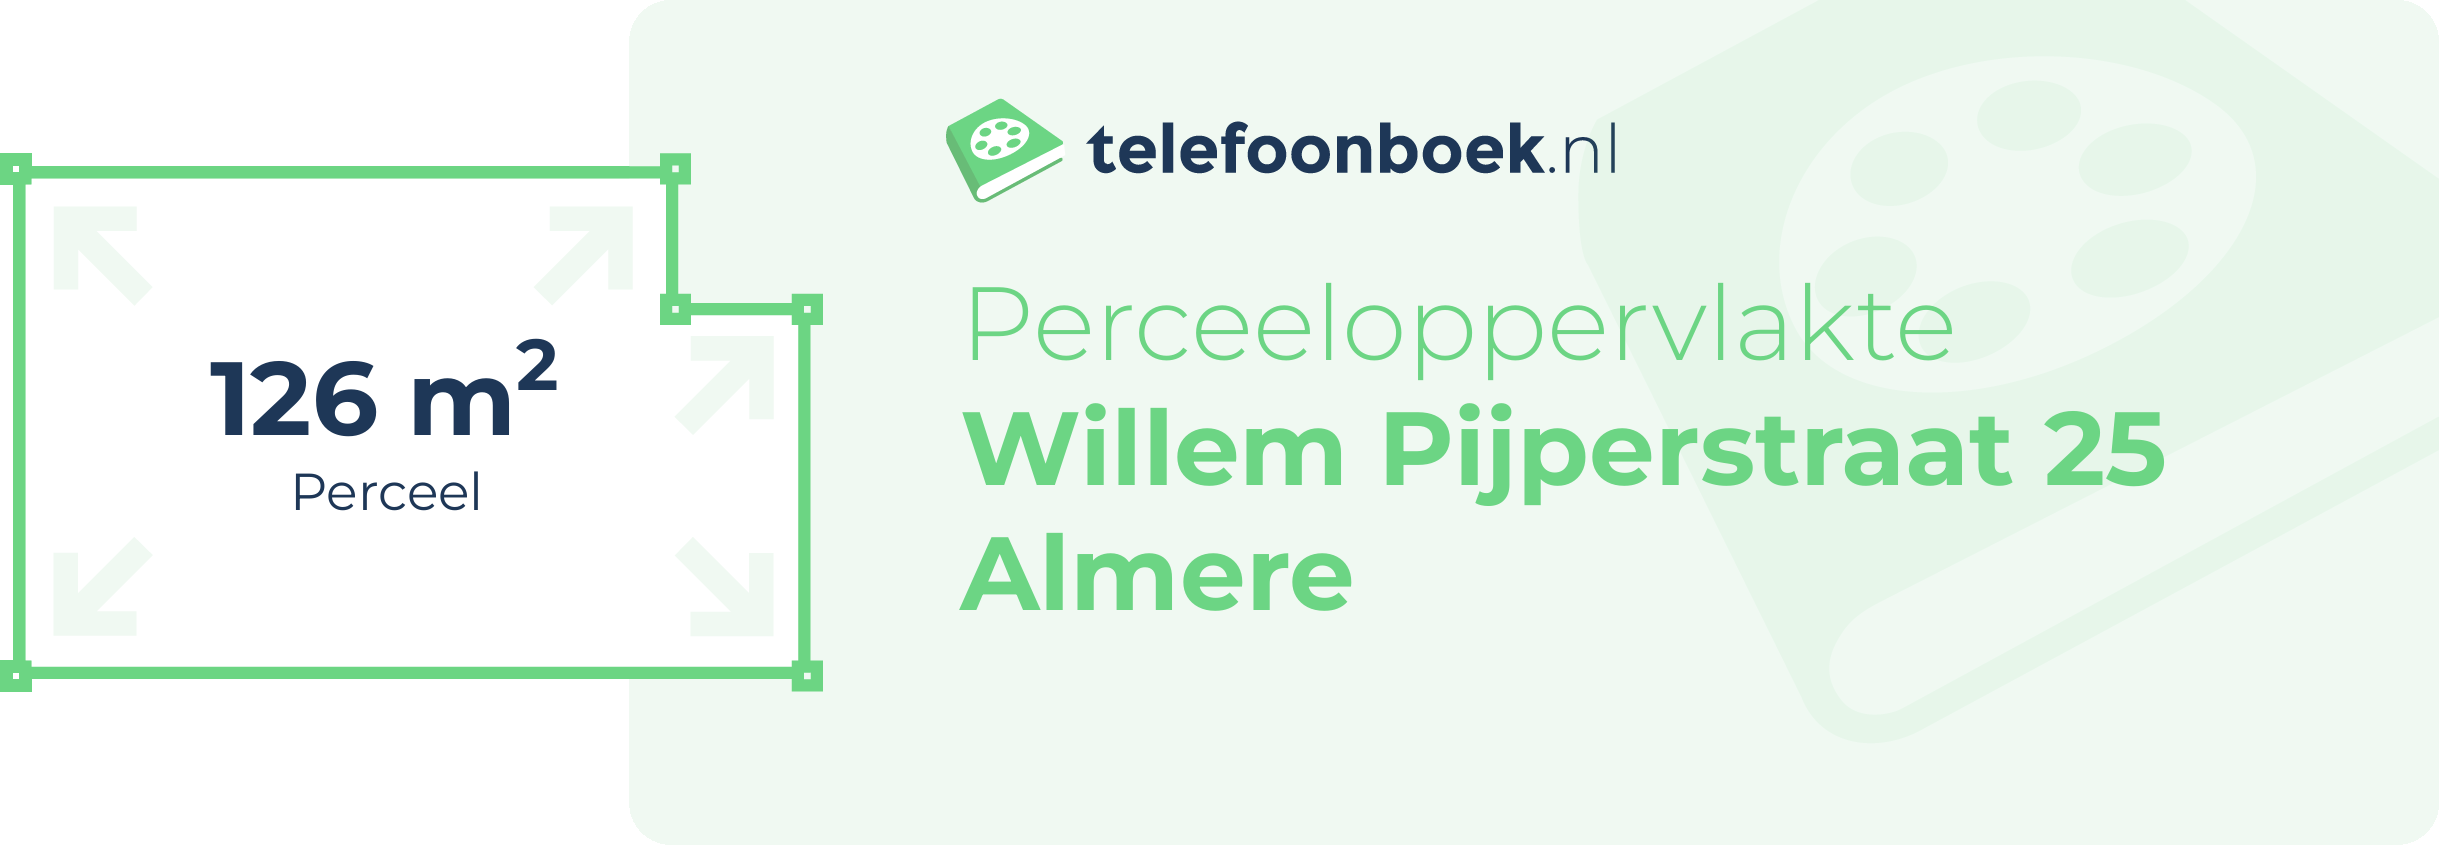 Perceeloppervlakte Willem Pijperstraat 25 Almere